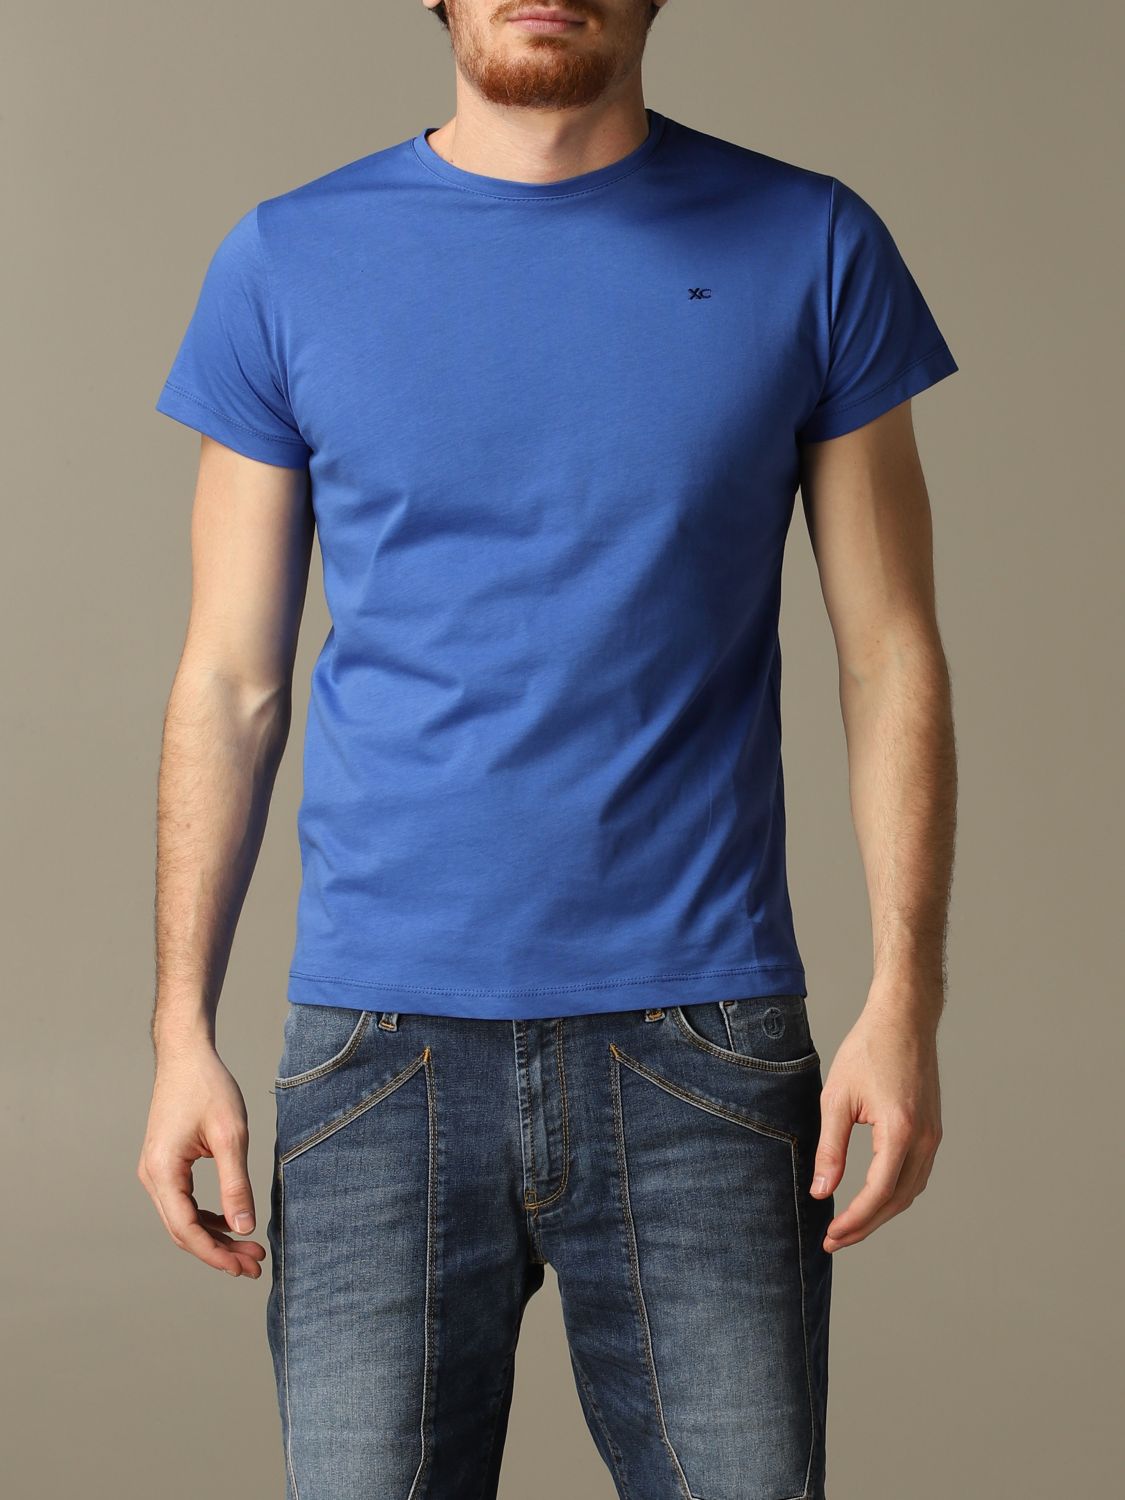 Xc T-Shirt XC Men colour Royal Blue